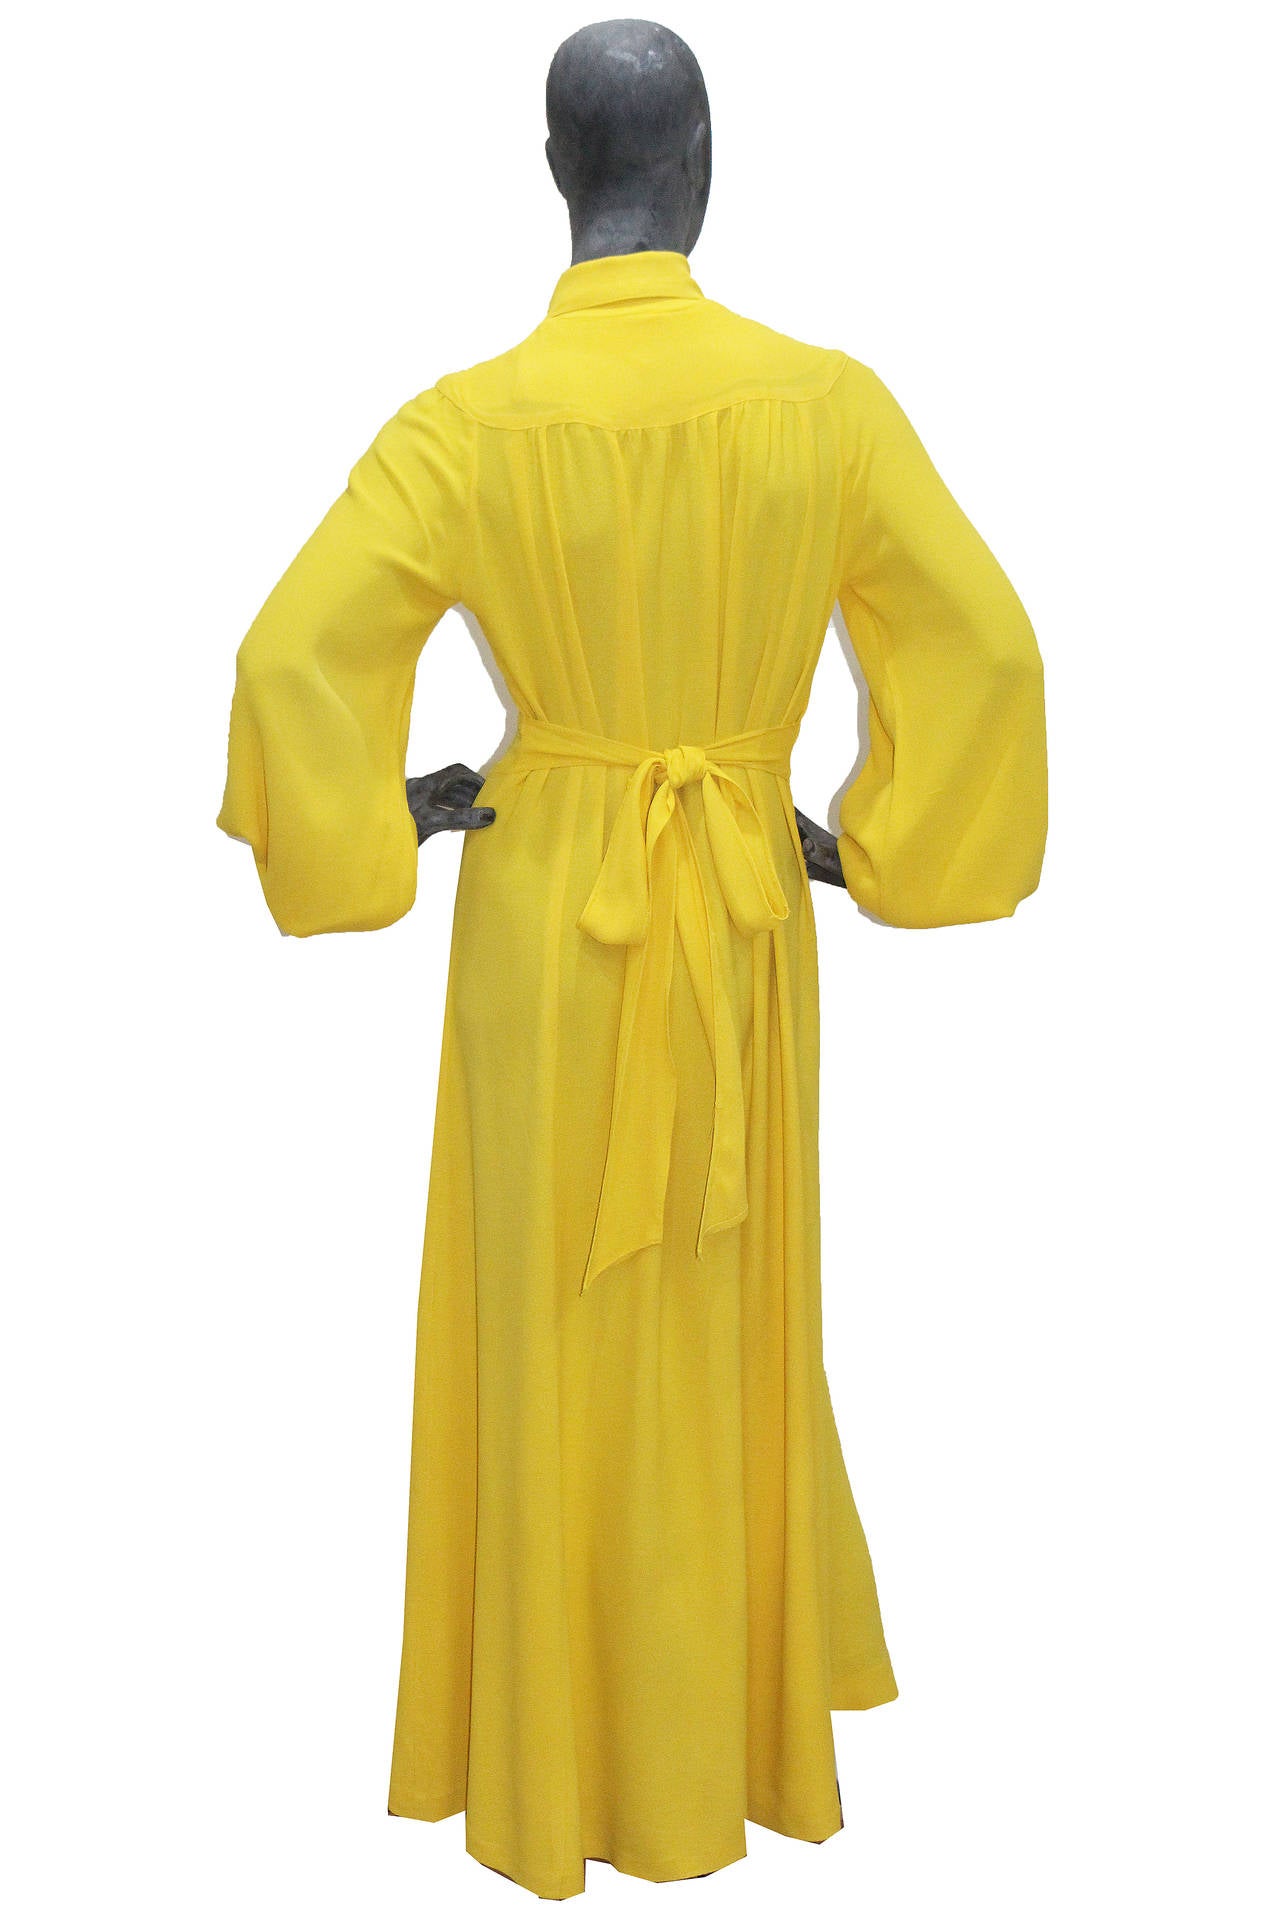 Women's Ossie Clark Brilliant Yellow Moss Crepe Evening Dress c. 1975